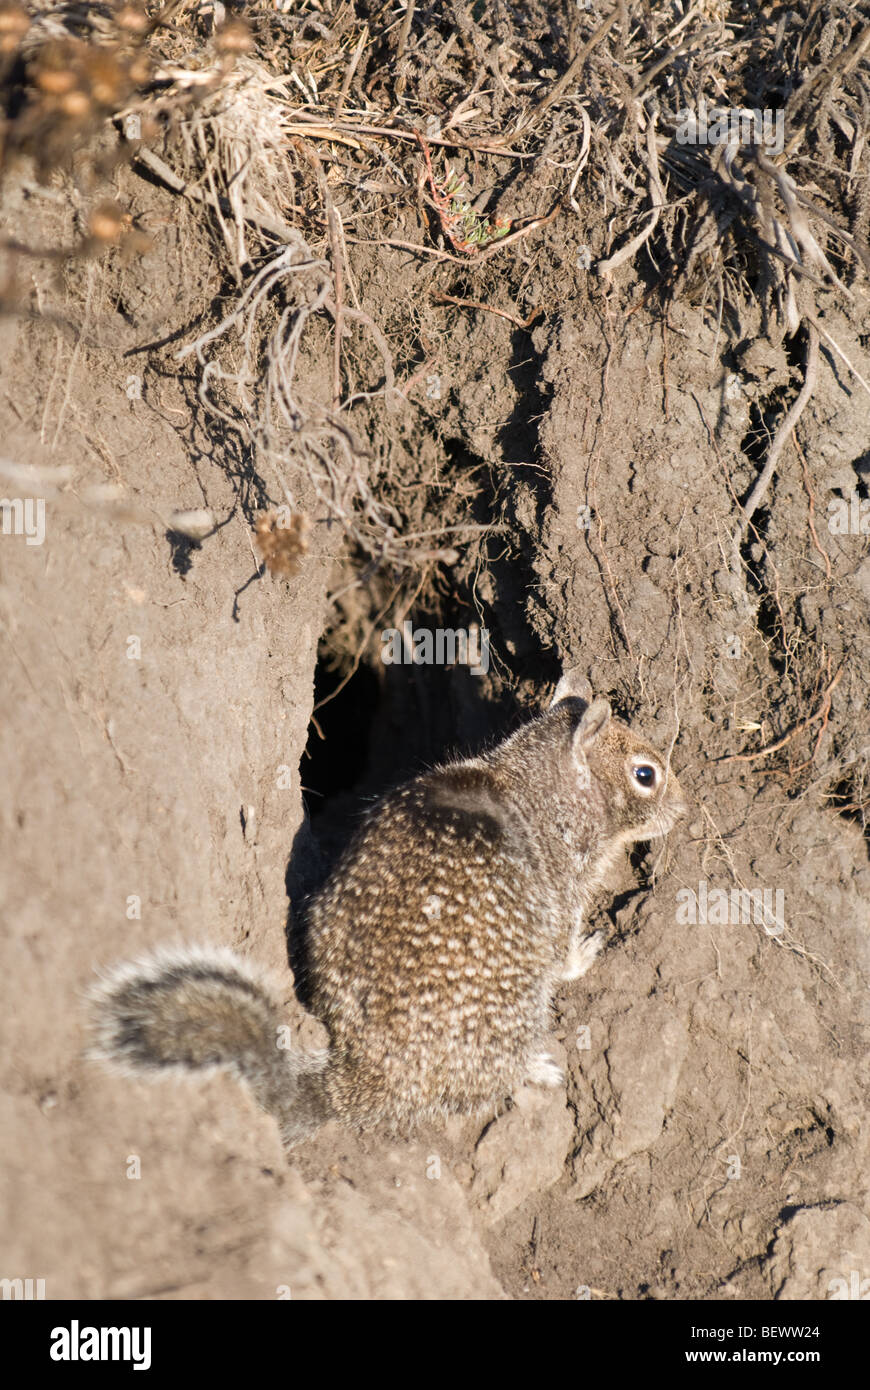 A California Ground Squirrel (Spermophilus beecheyi) in MacKerricher State Park, California. Stock Photo